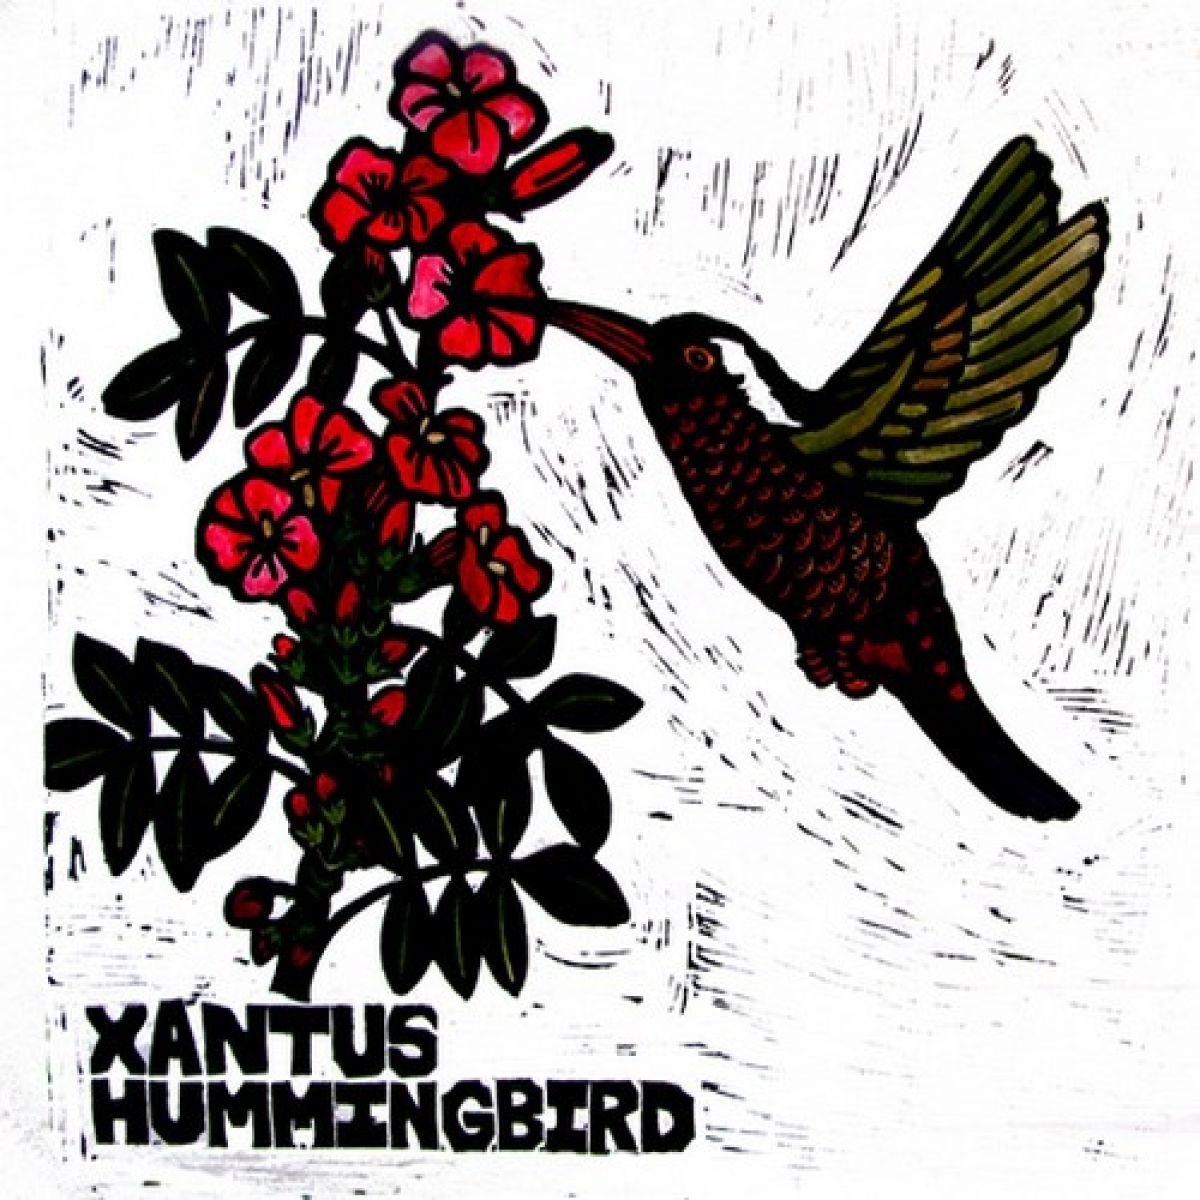 XANTUS HUMMINGBIRD by Laurel Macdonald